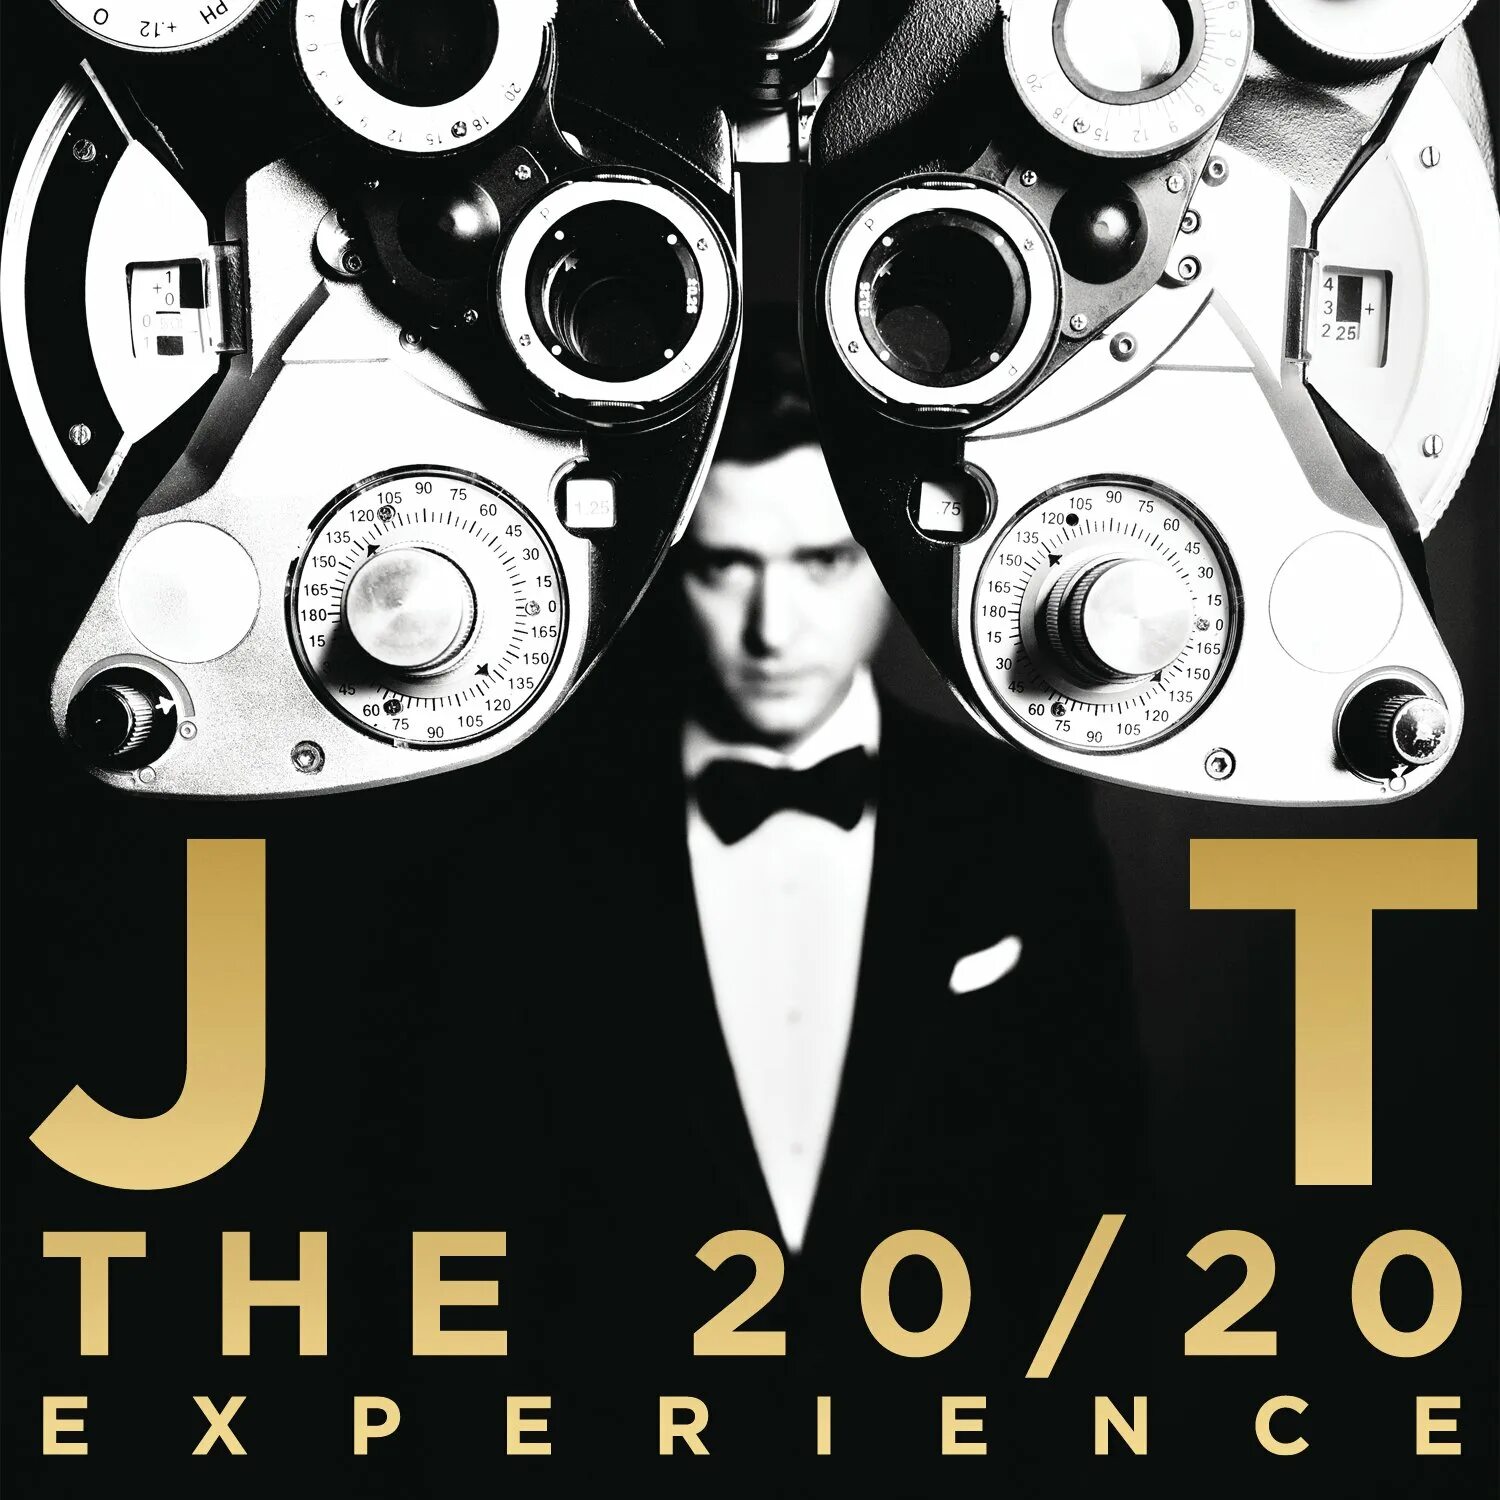 Justin Timberlake 20/20 experience. Justin Timberlake 20/20 experience Cover. Джастин Тимберлейк альбомы. Justin Timberlake обложка альбома.